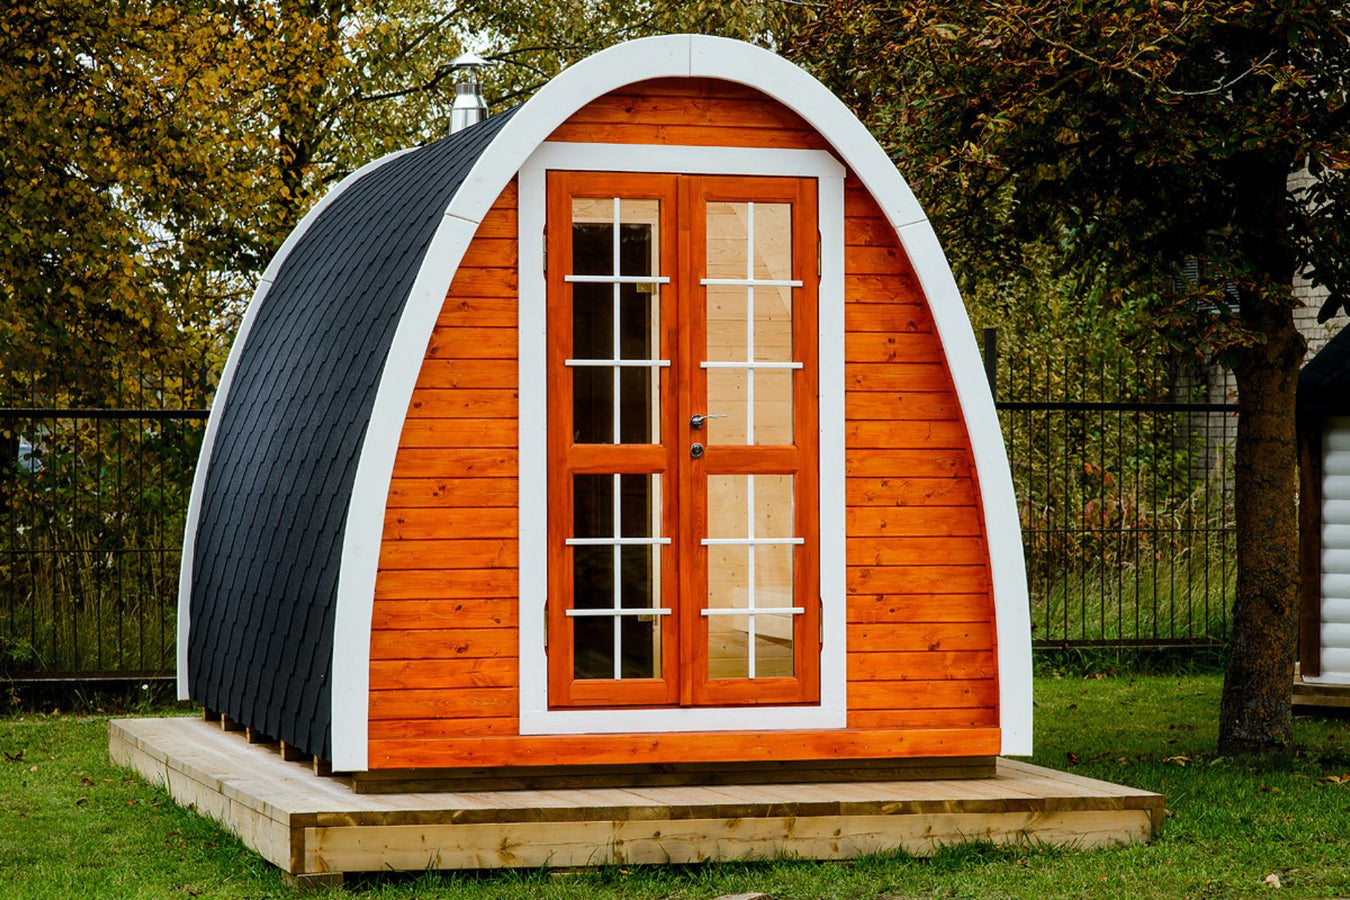 Sauna pod lifestyle outdoor arrangement on a wooden platform